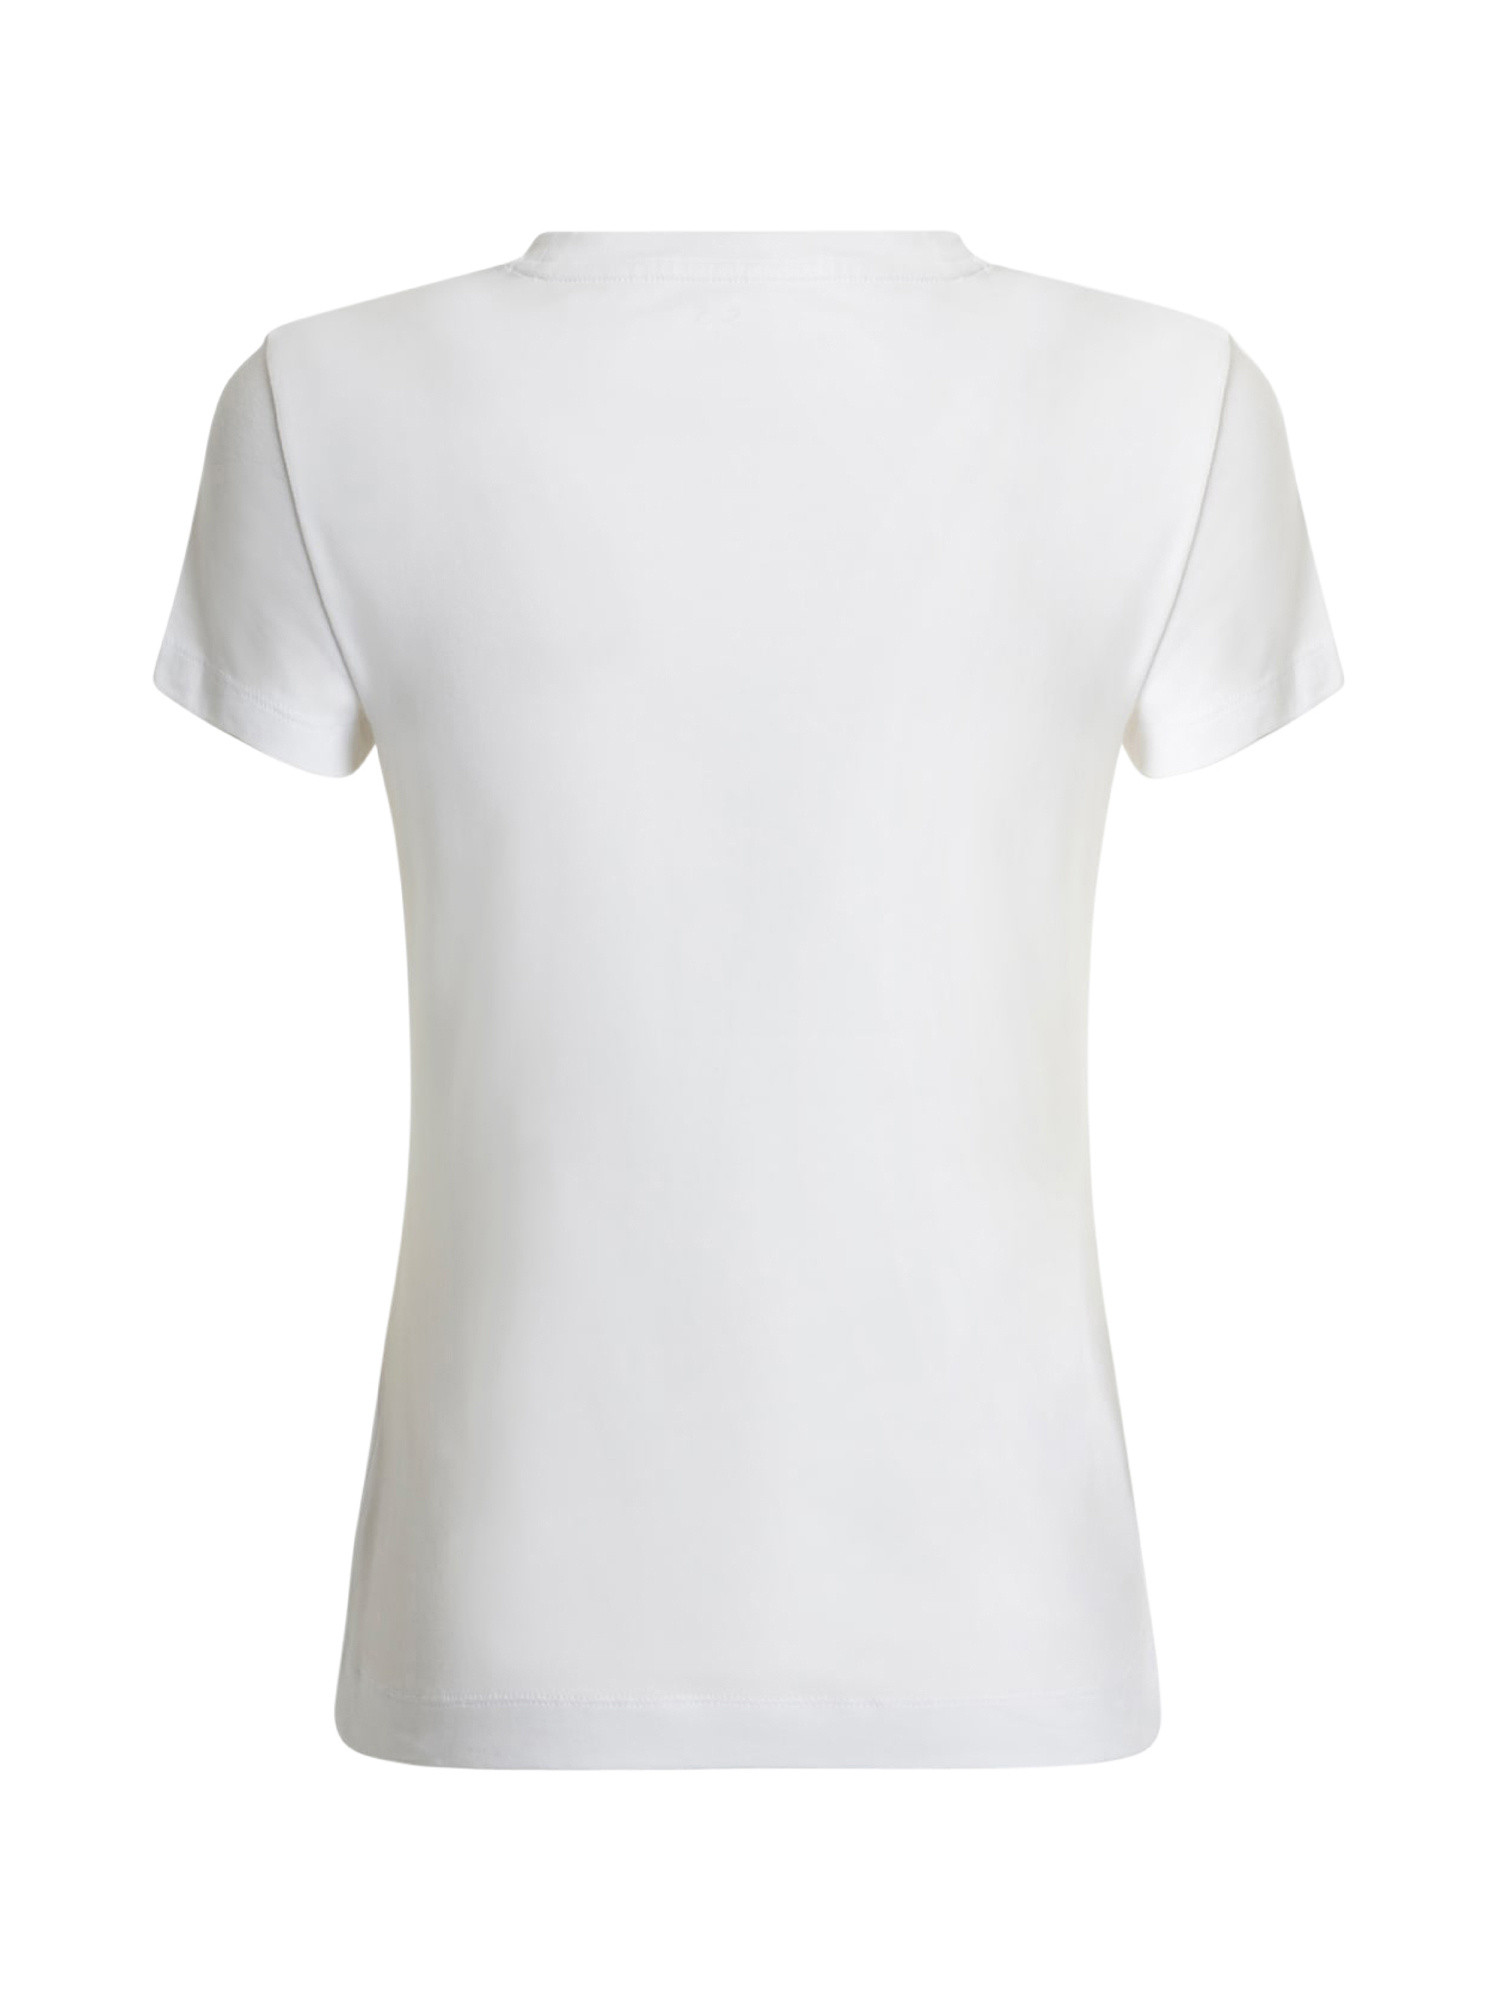 Front logo t-shirt, White, large image number 1